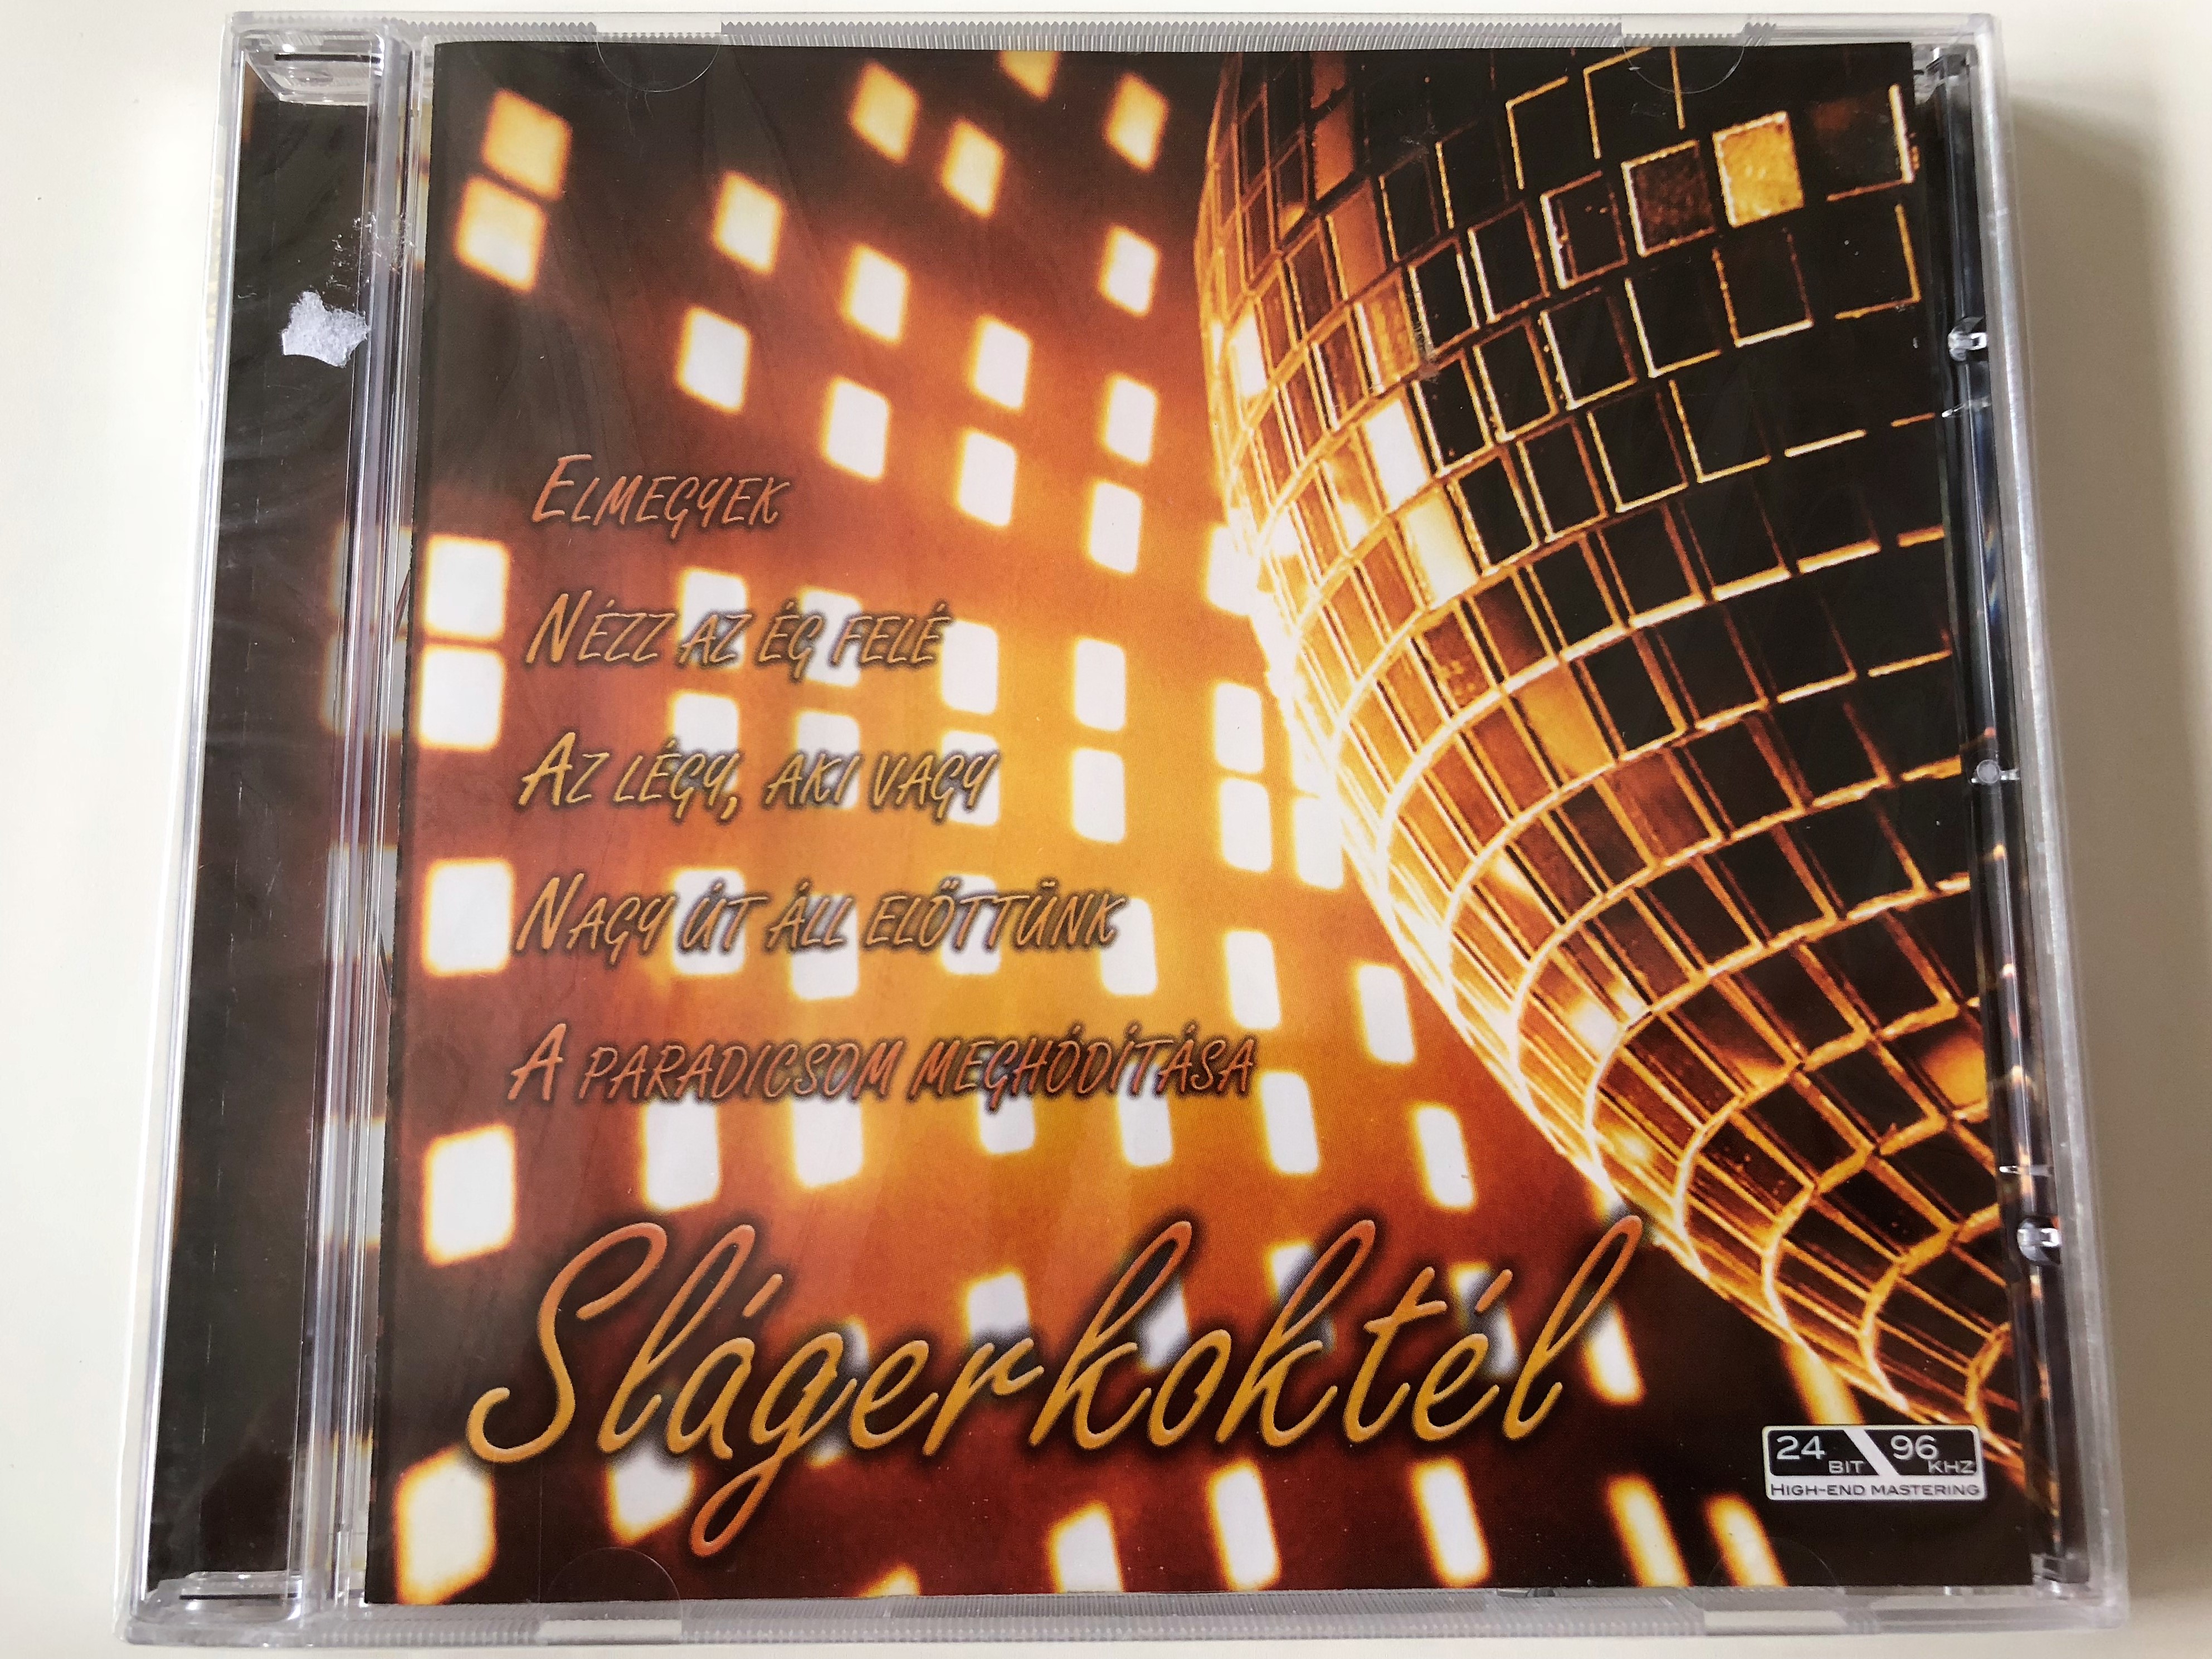 sl-gerkokt-l-micro-egy-ttes-cd-2006-vass-szilvia-16-cover-versions-of-popular-songs-arcd2020.jpg